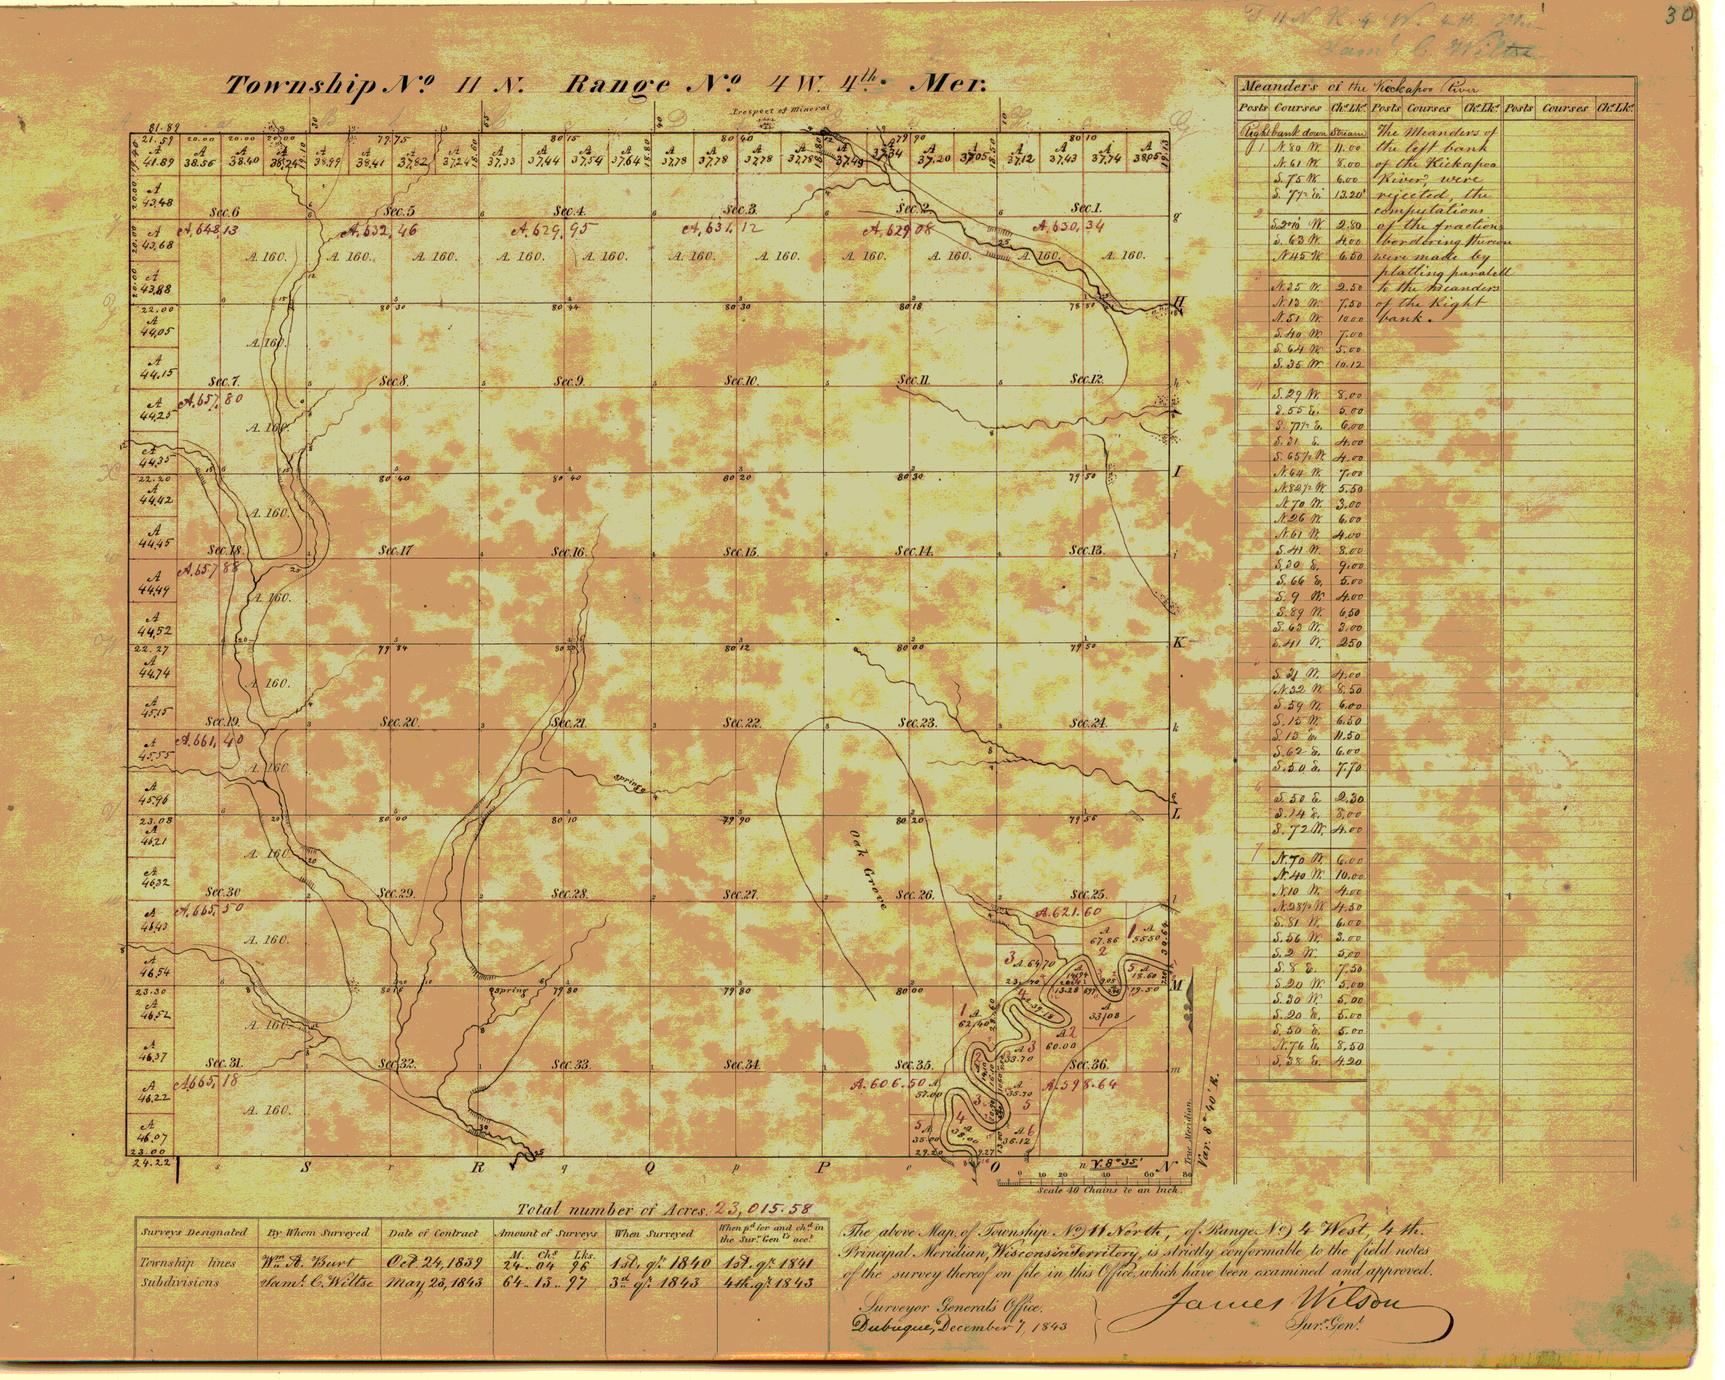 [Public Land Survey System map: Wisconsin Township 11 North, Range 04 West]